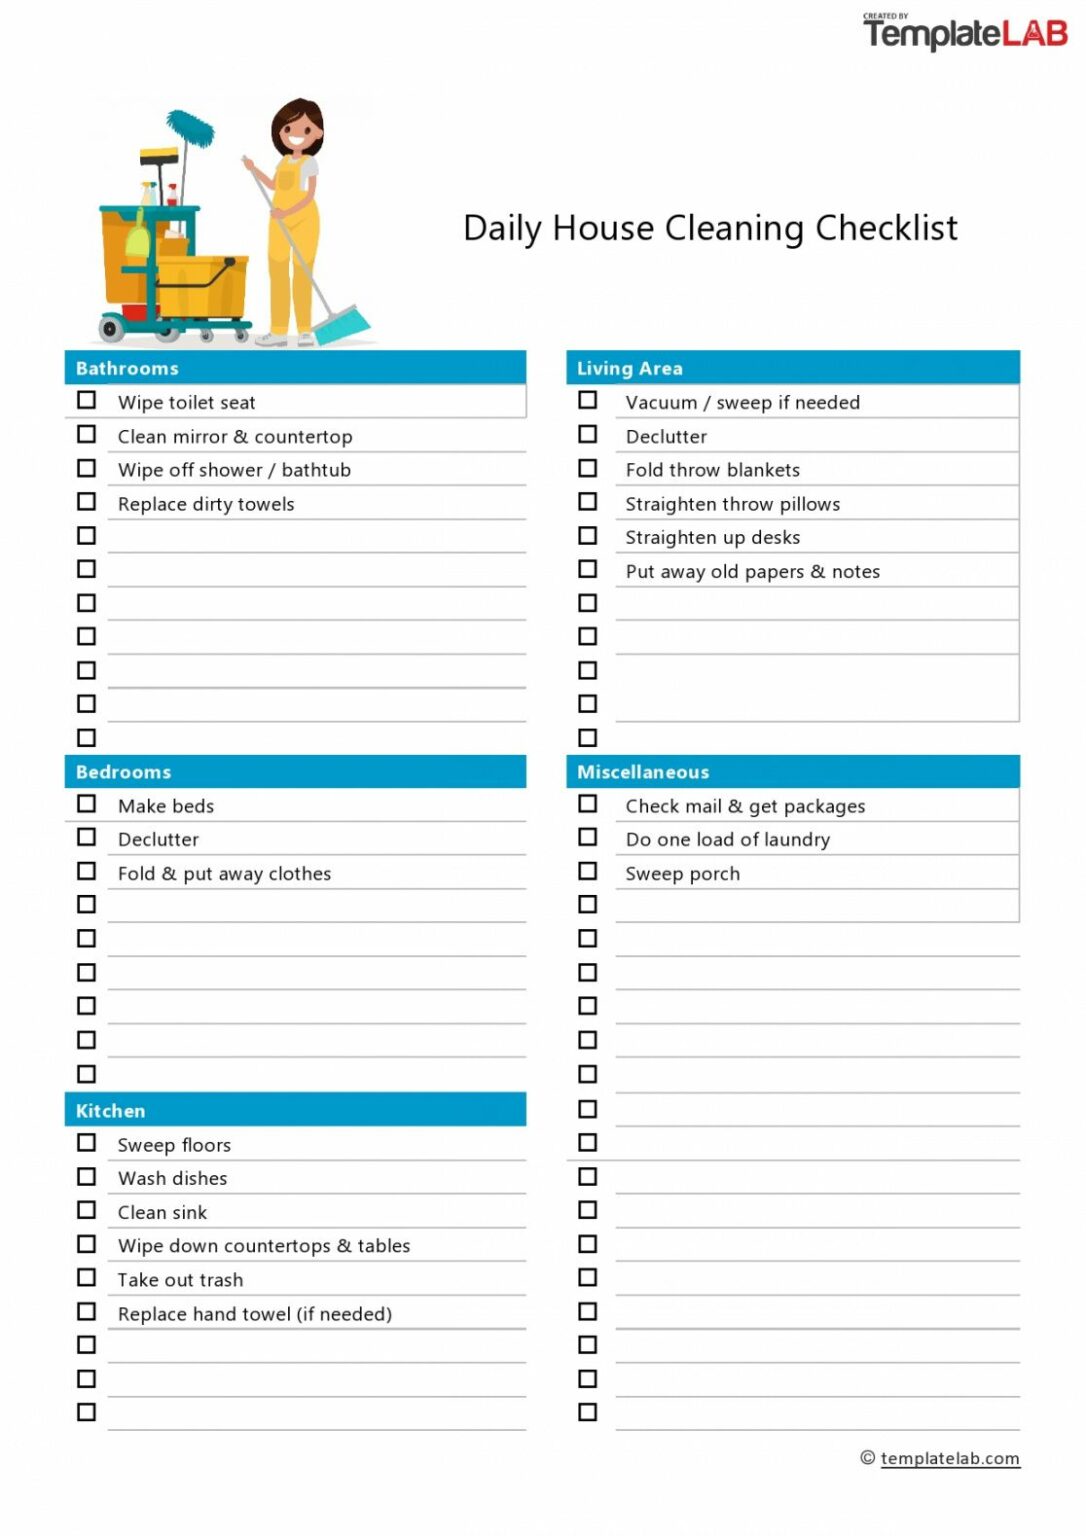 myplate daily checklist